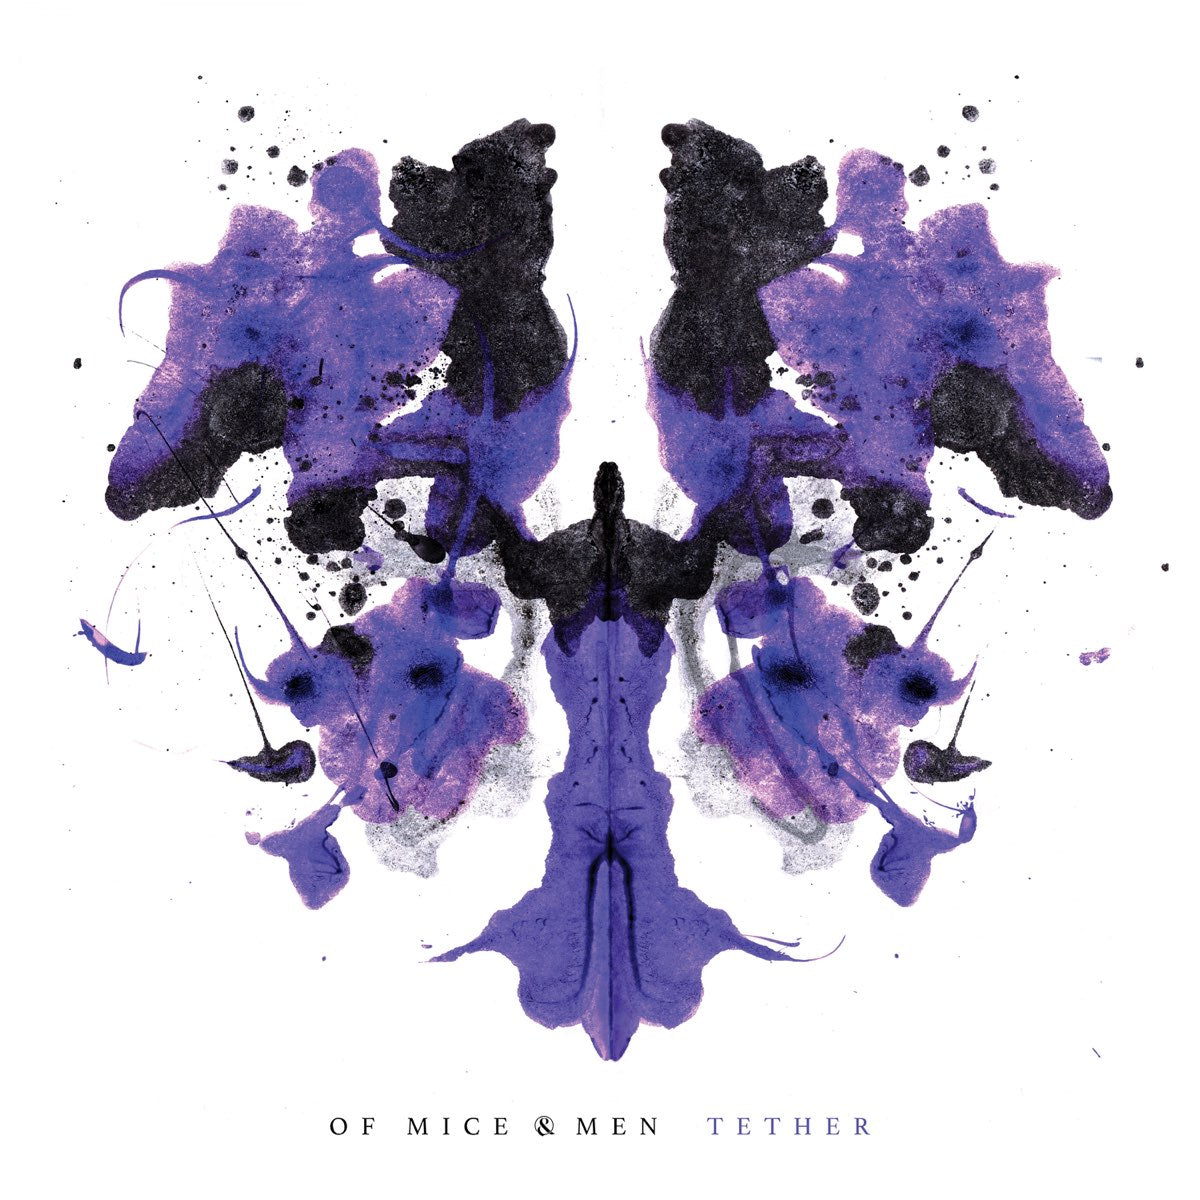 OF MICE & MEN - Tether - LP - Purple / Black Marbled Vinyl [OCT 6]